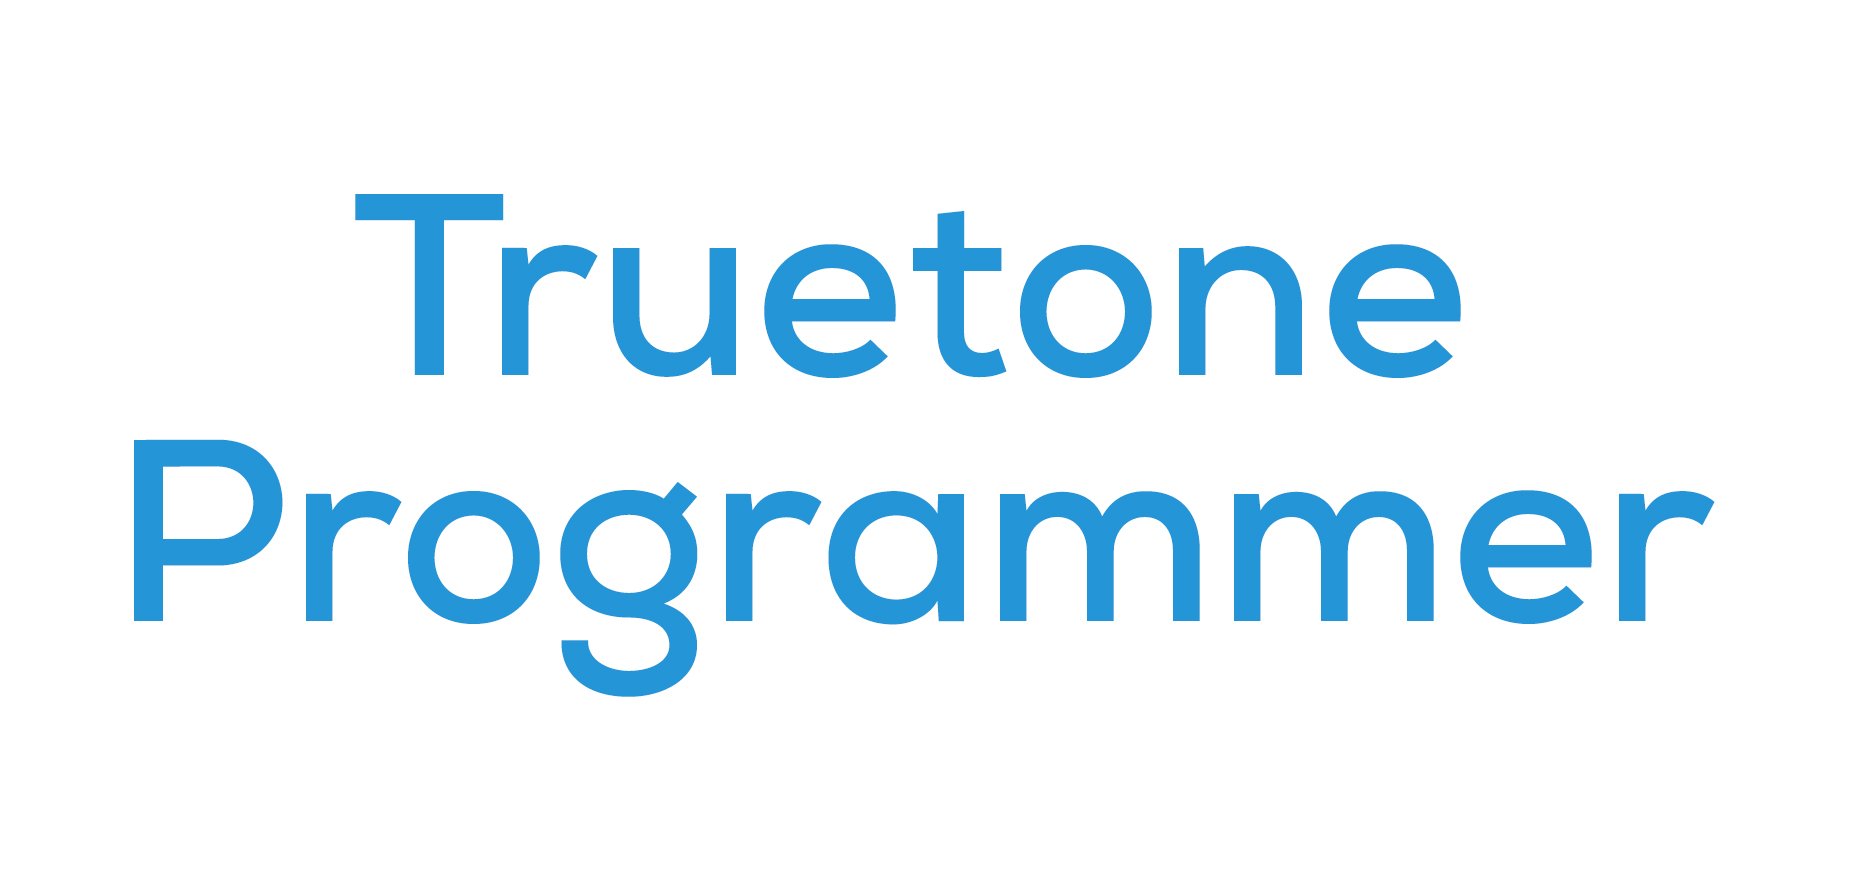 Truetone Programmer